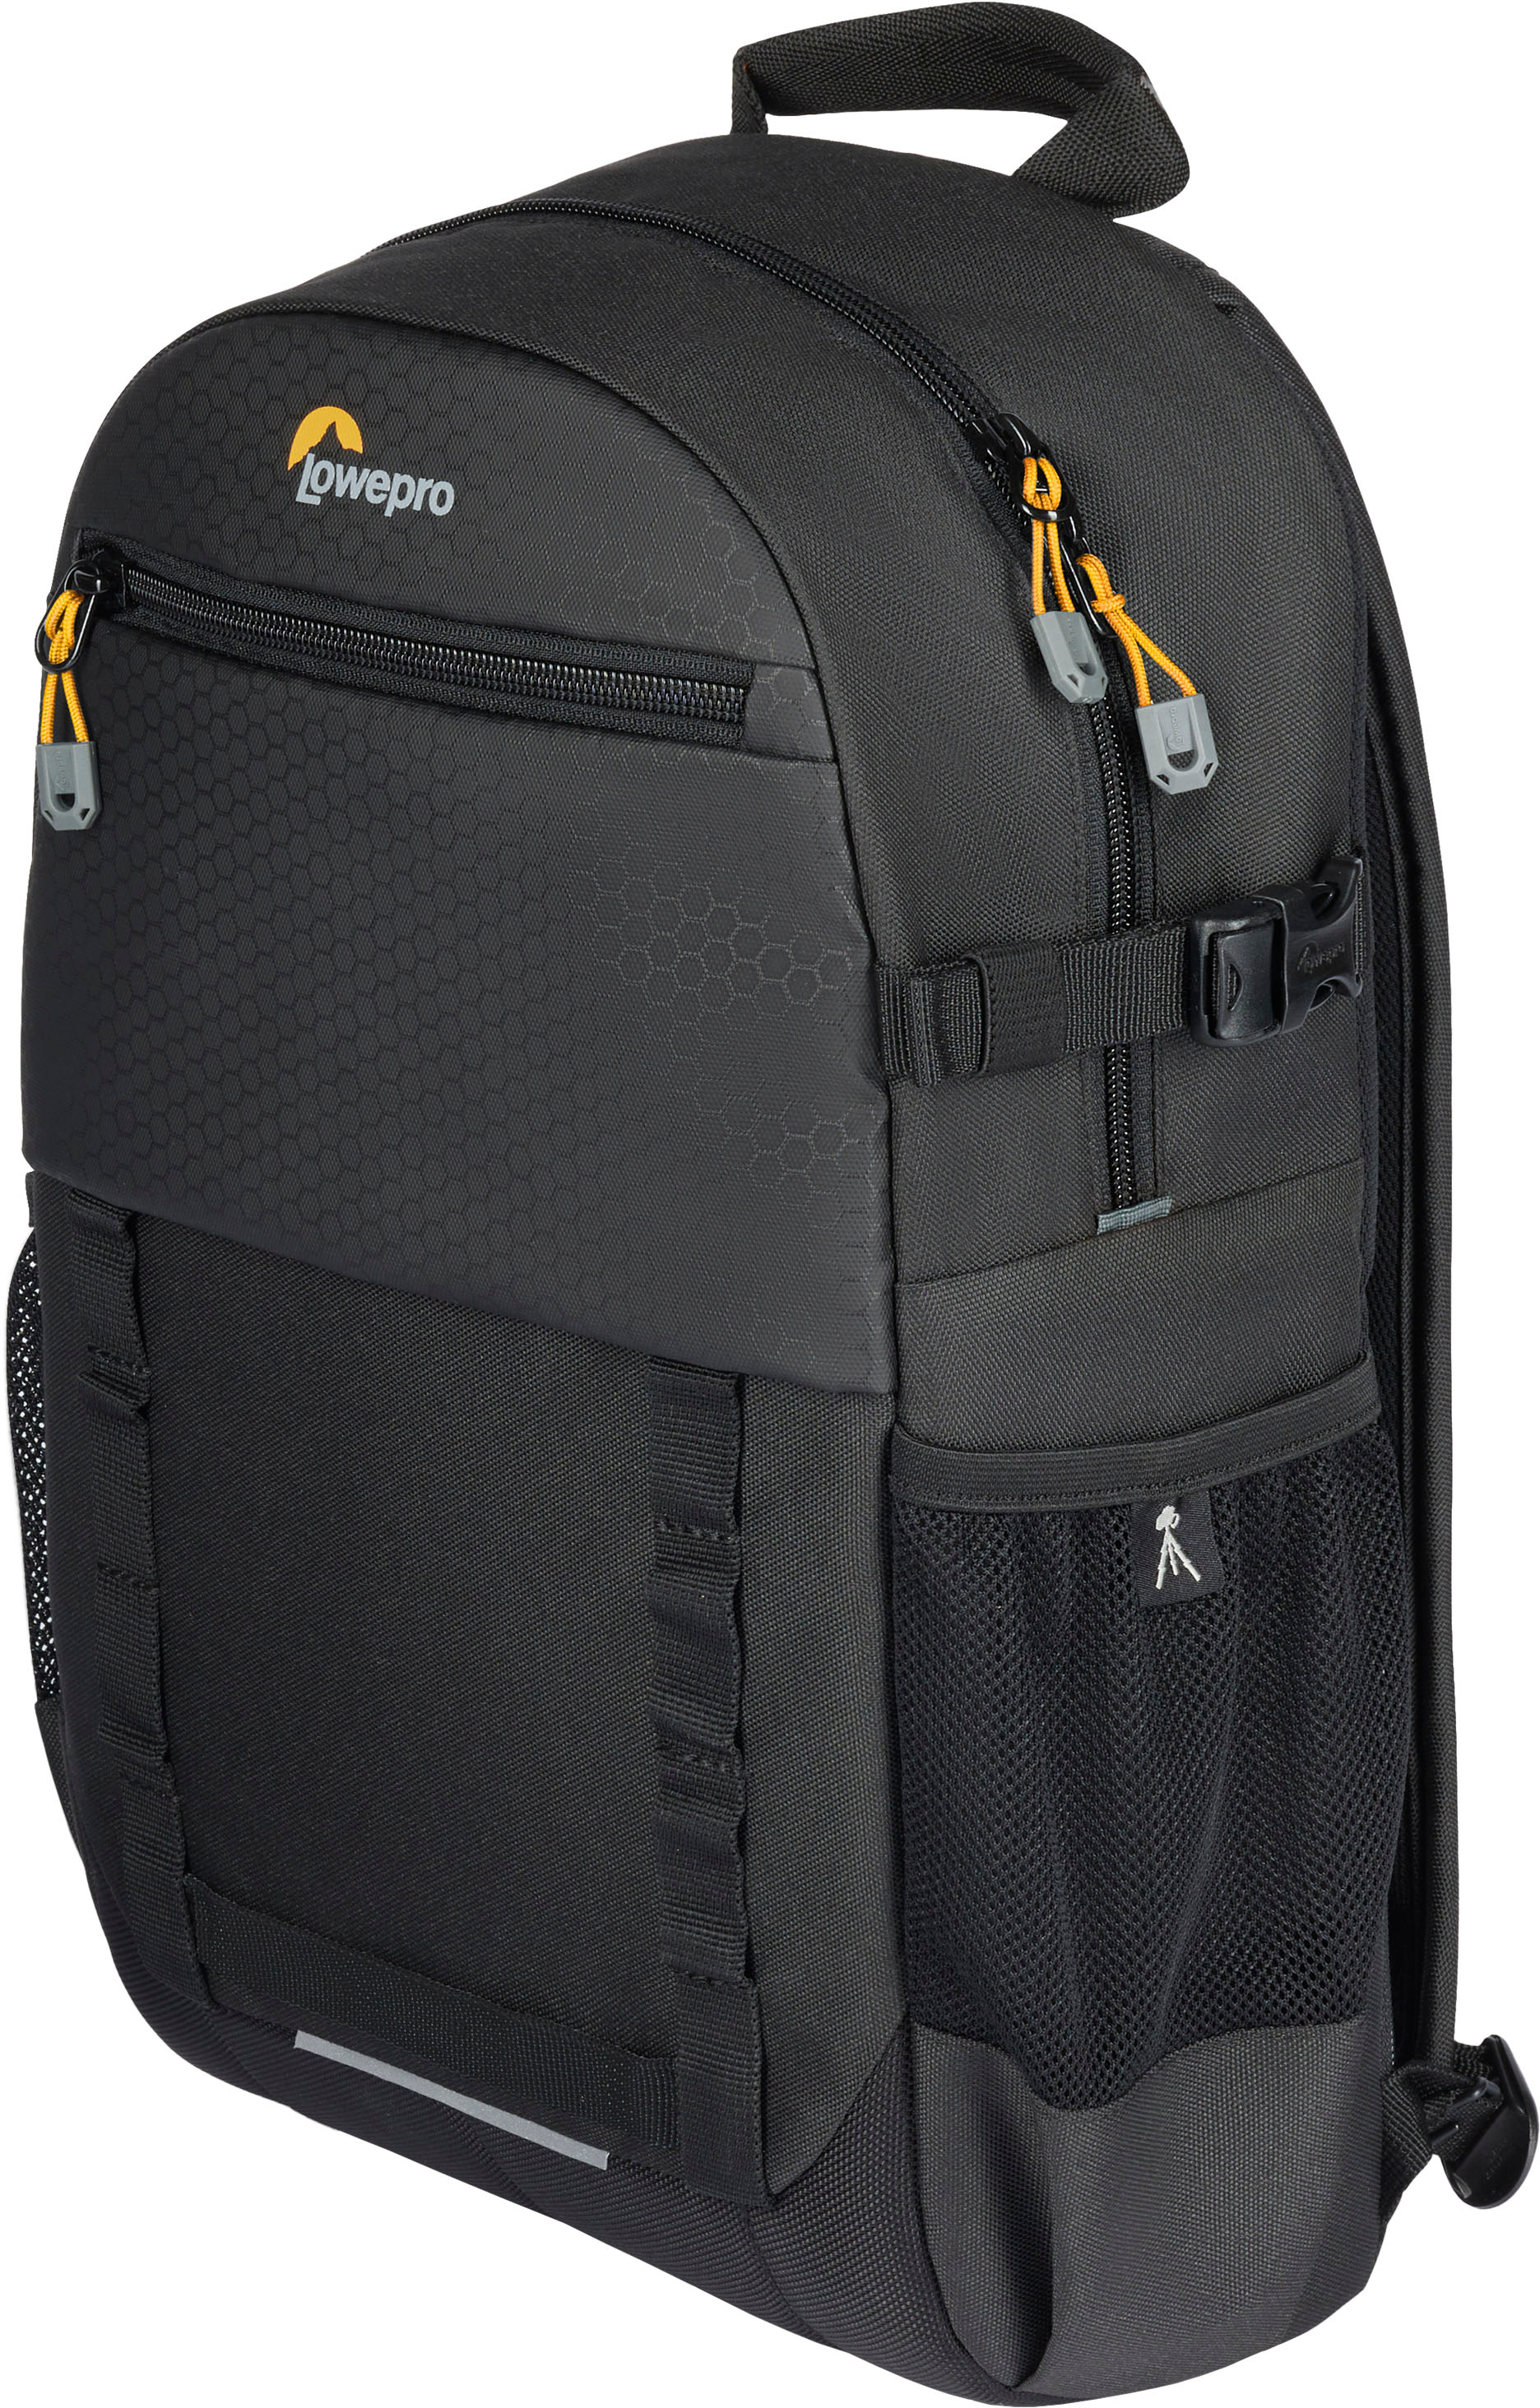 Angle View: Lowepro - Adventura Go BP 150 Backpack - Black